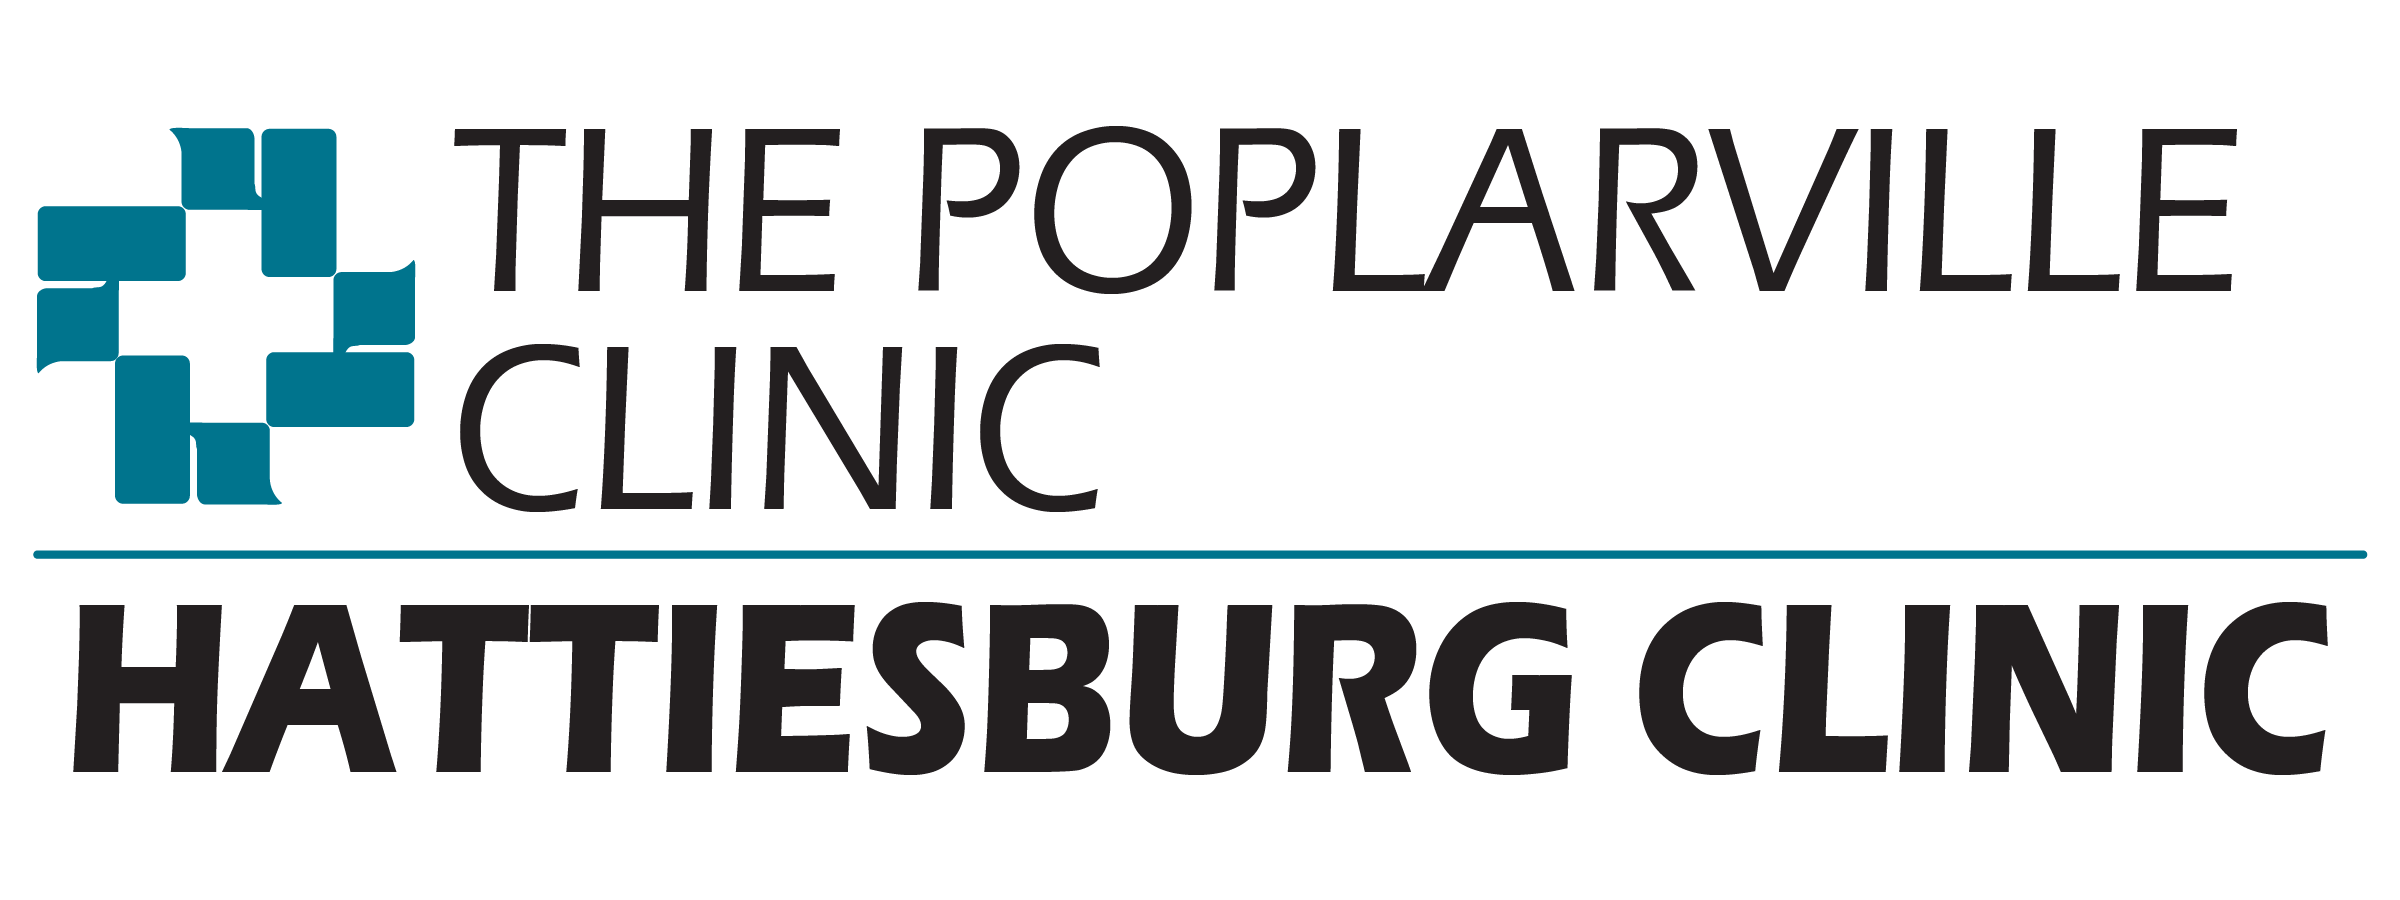 The Poplarville Clinic logo